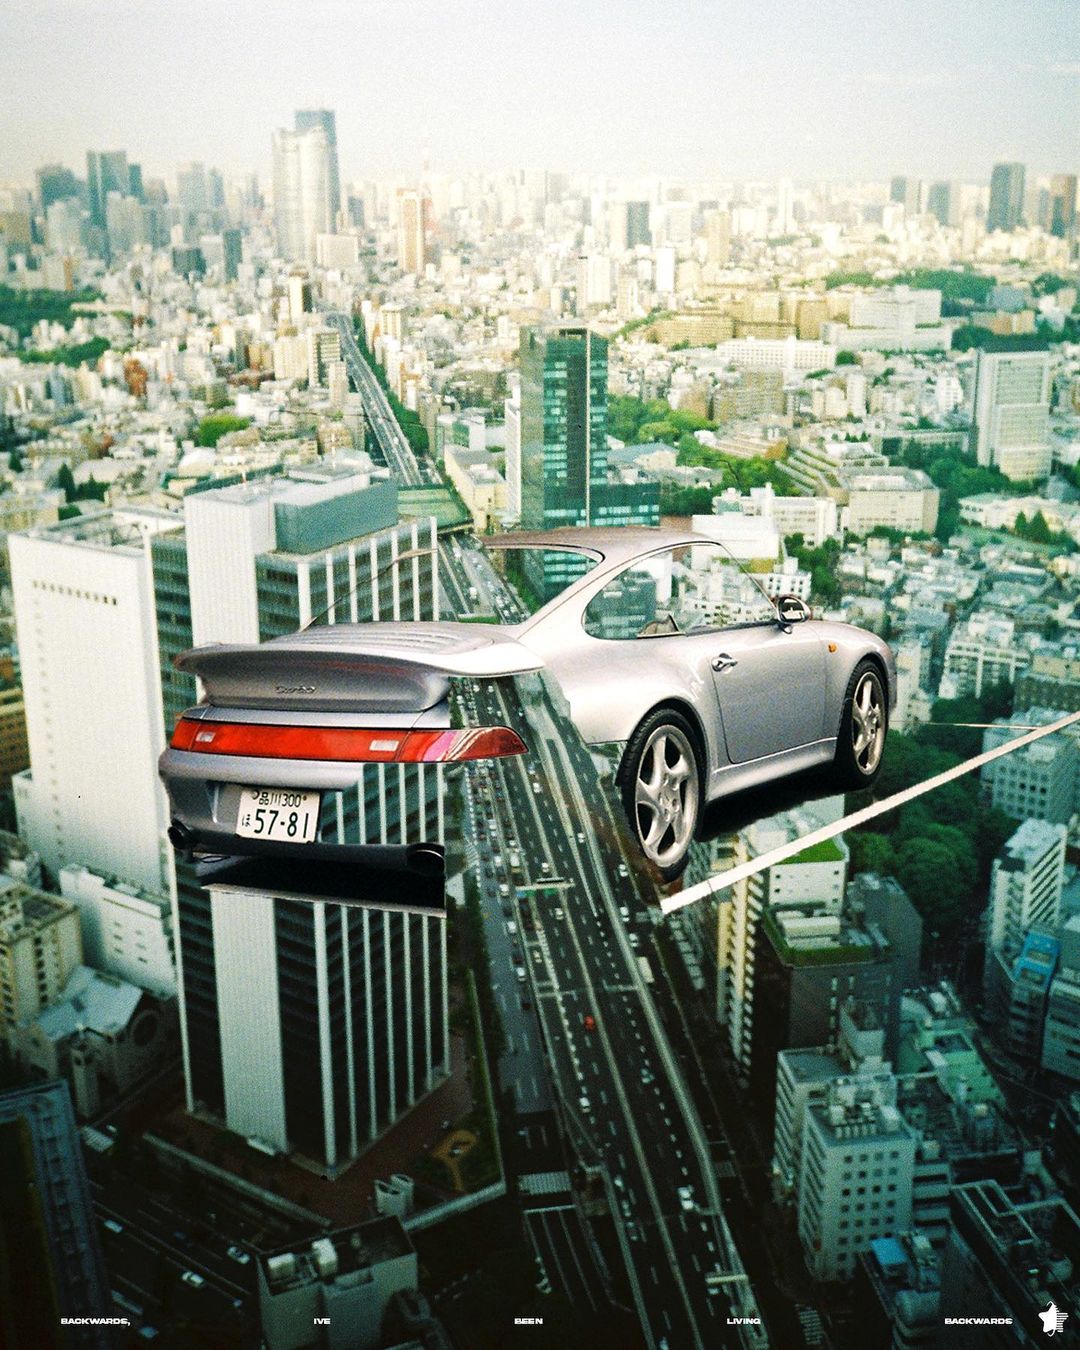 Silver Porsche 911 with city skyline edited through the car